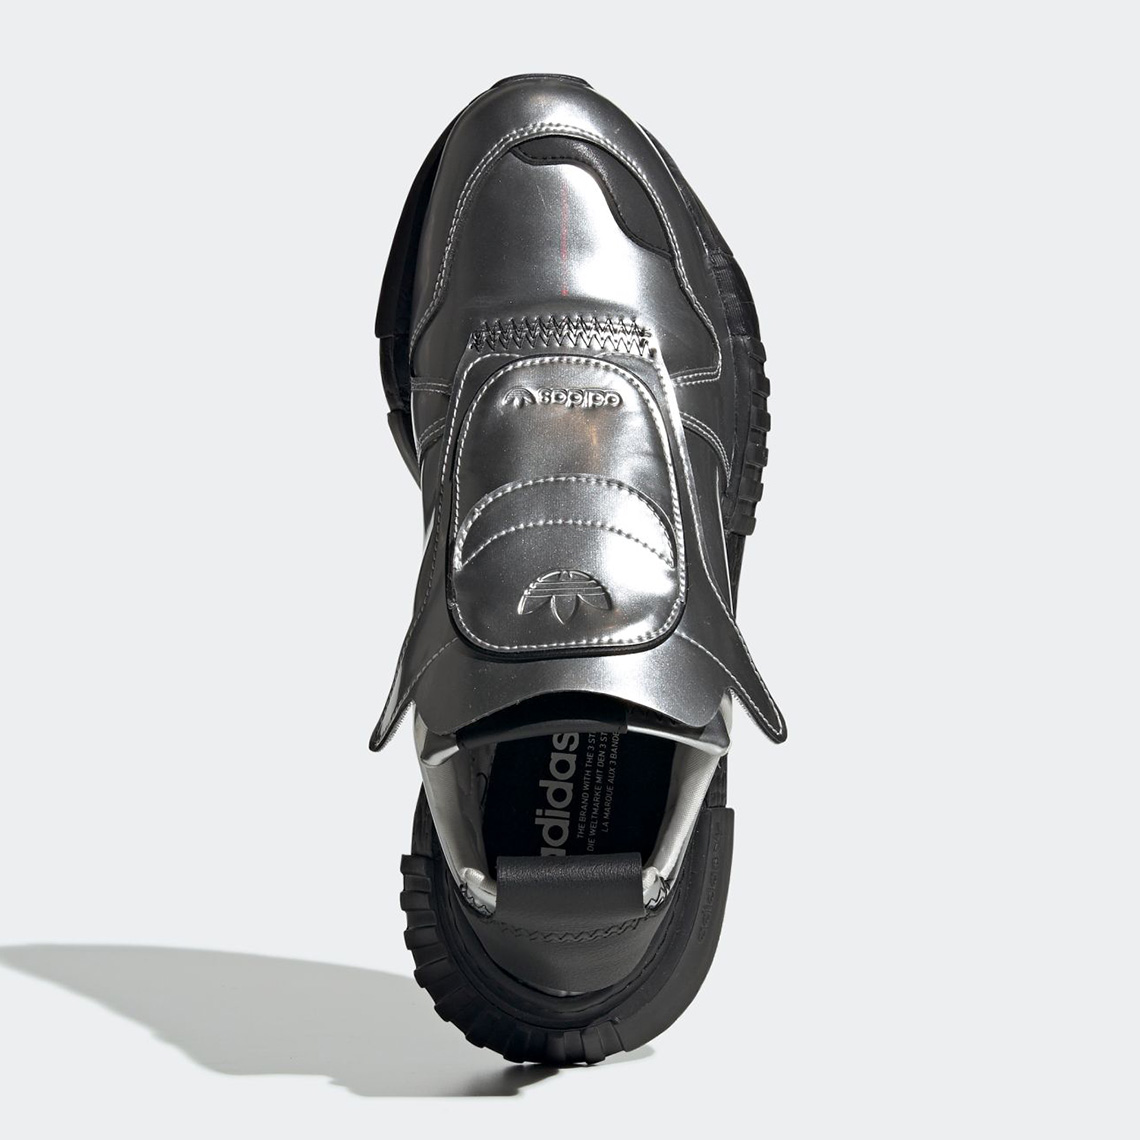 Adidas Futurepacer Silver Metallic Ee5002 3